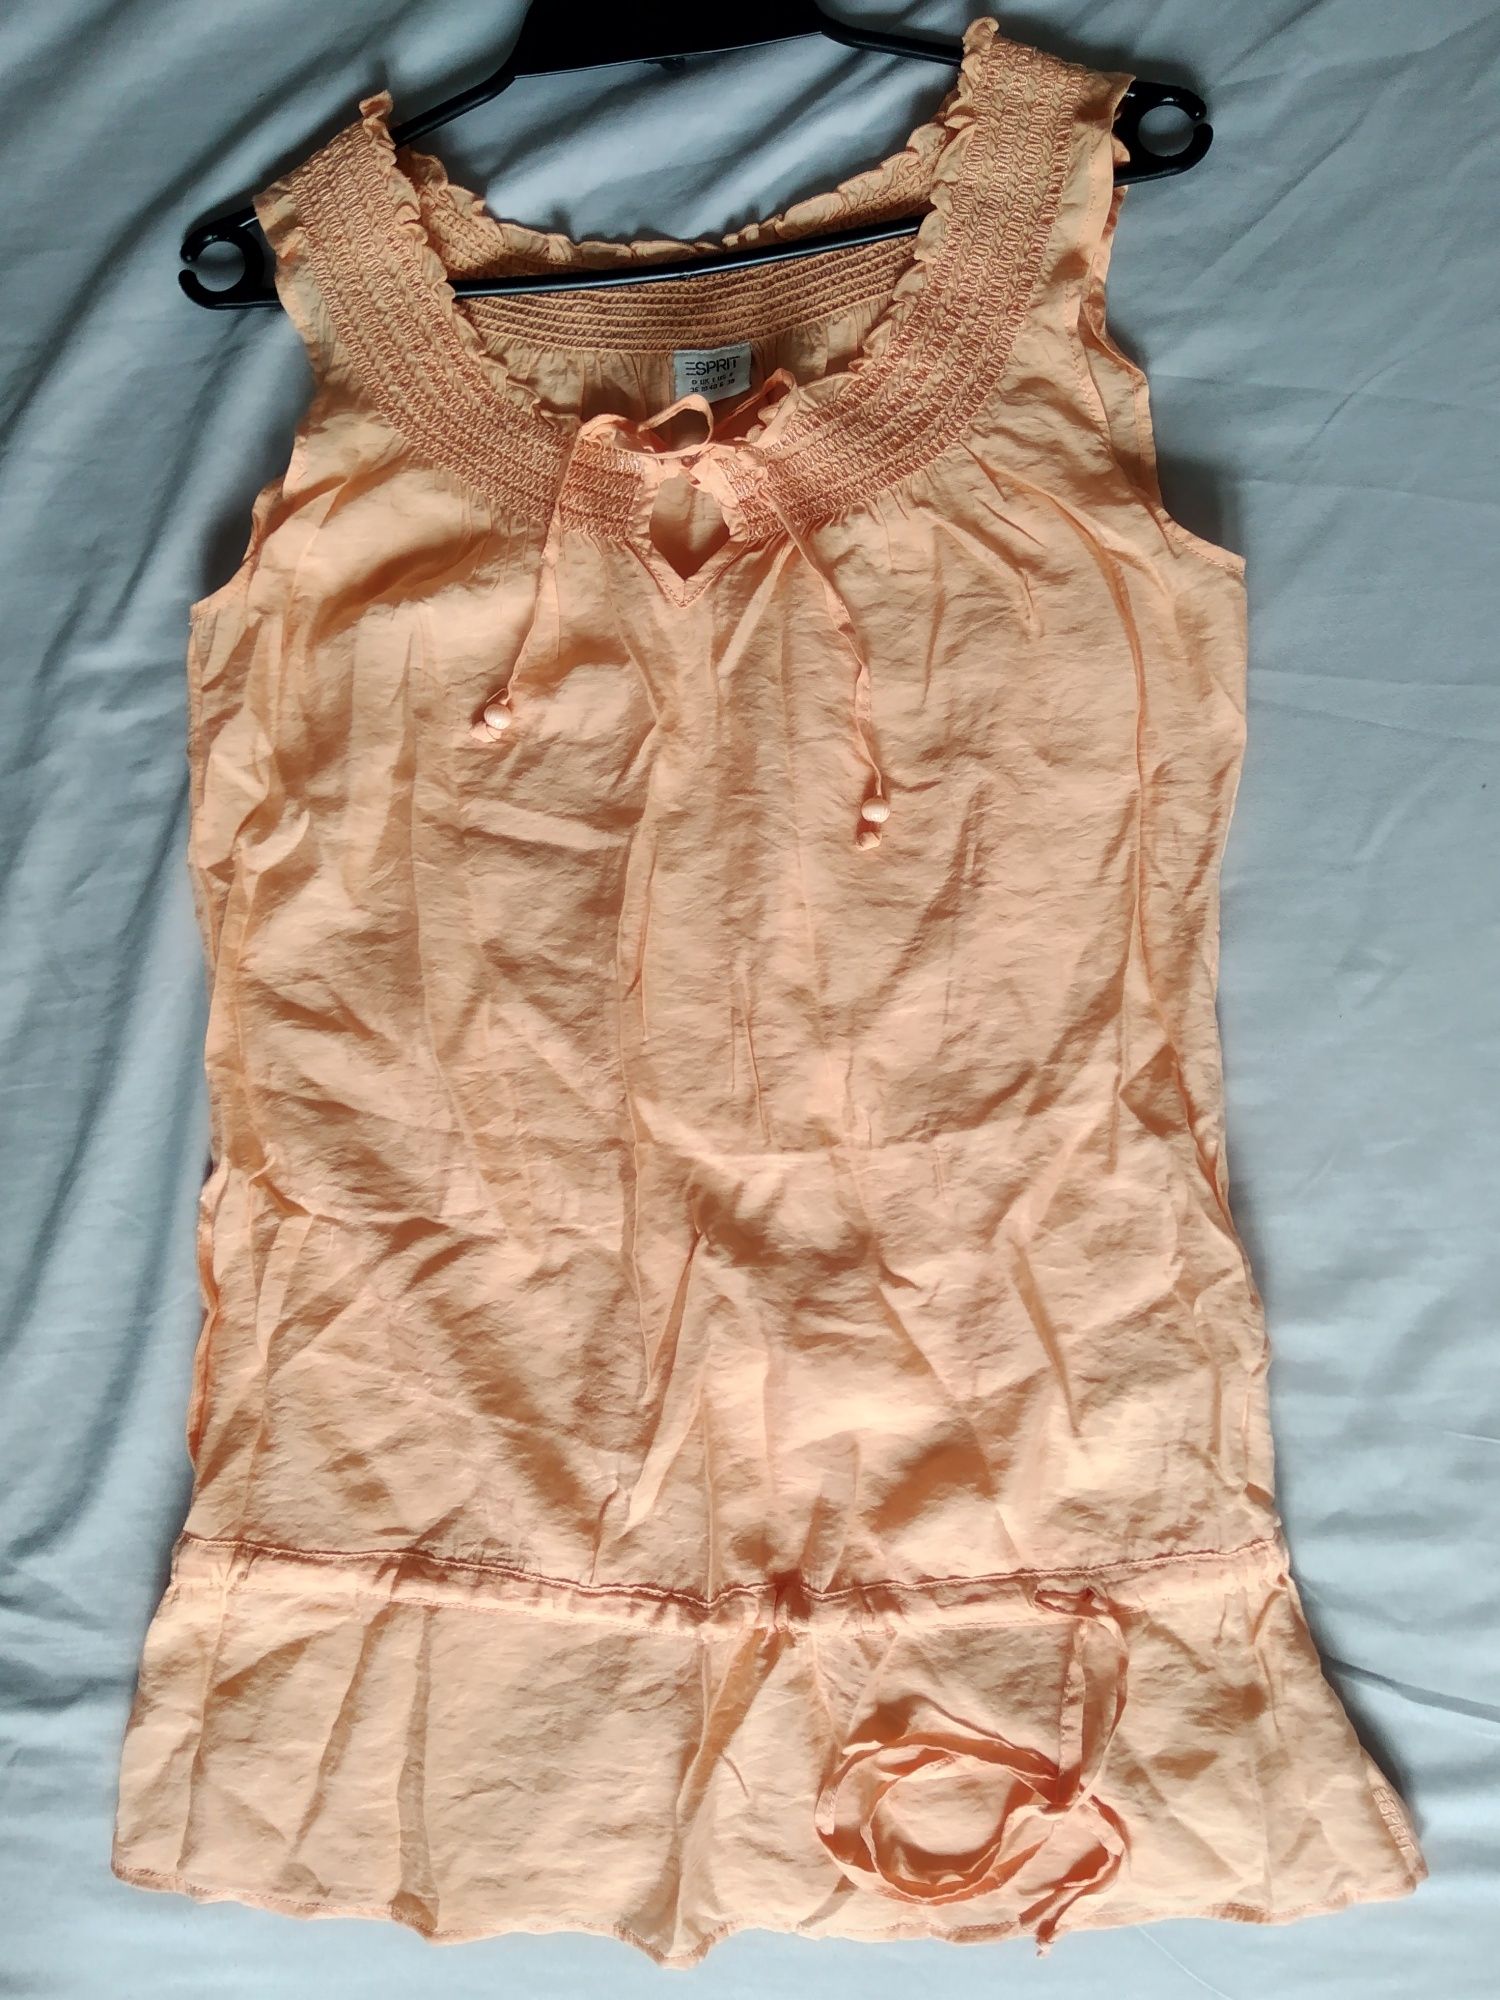 Bluzka letnia ESPRIT tunika na ramiączka brzoskwiniowa 36S